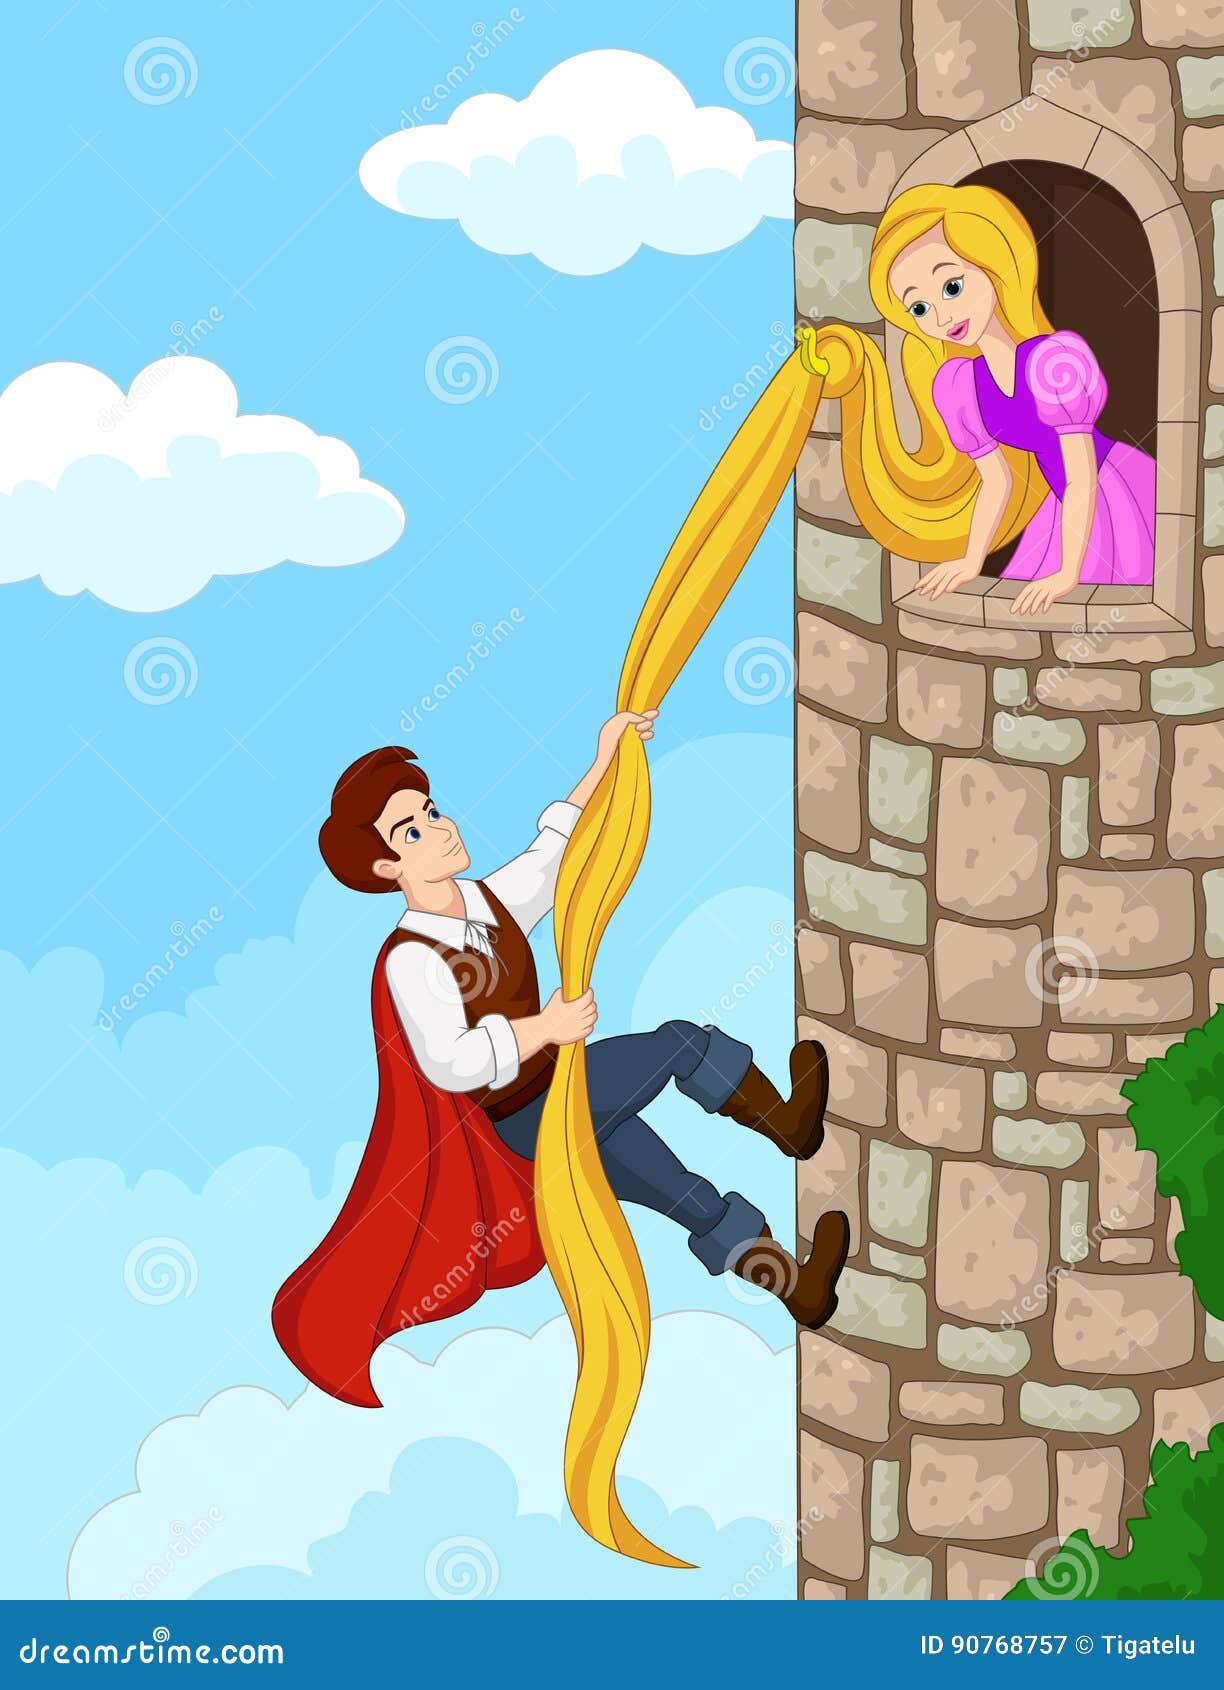 prince climbing tower using long hair